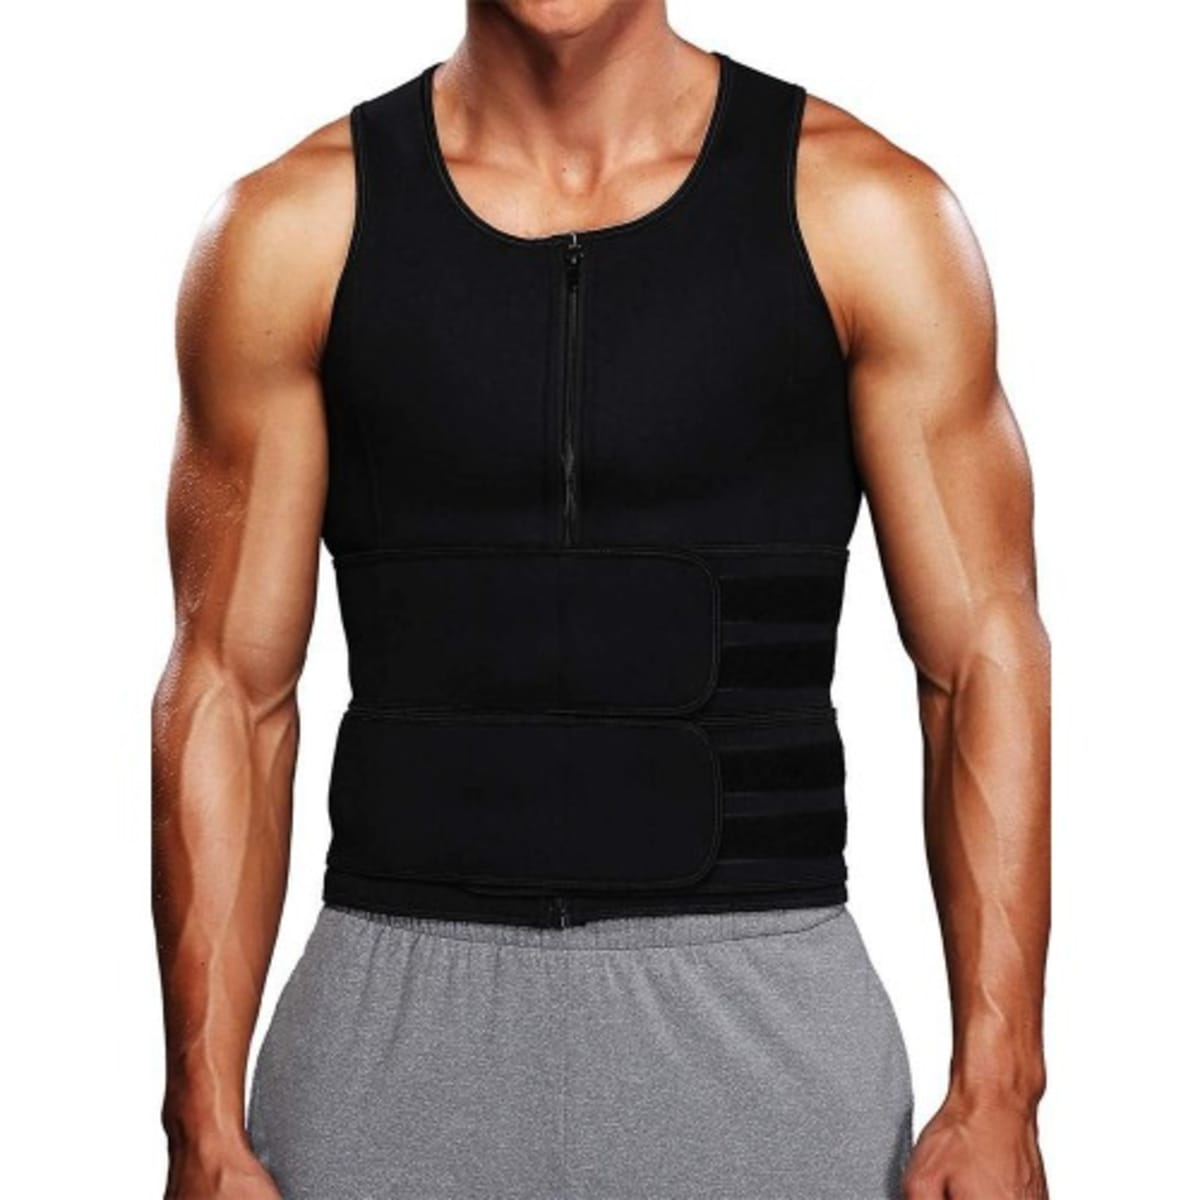 Waist Trainer Adjustable Corset Vest Body Shaper - L - Black